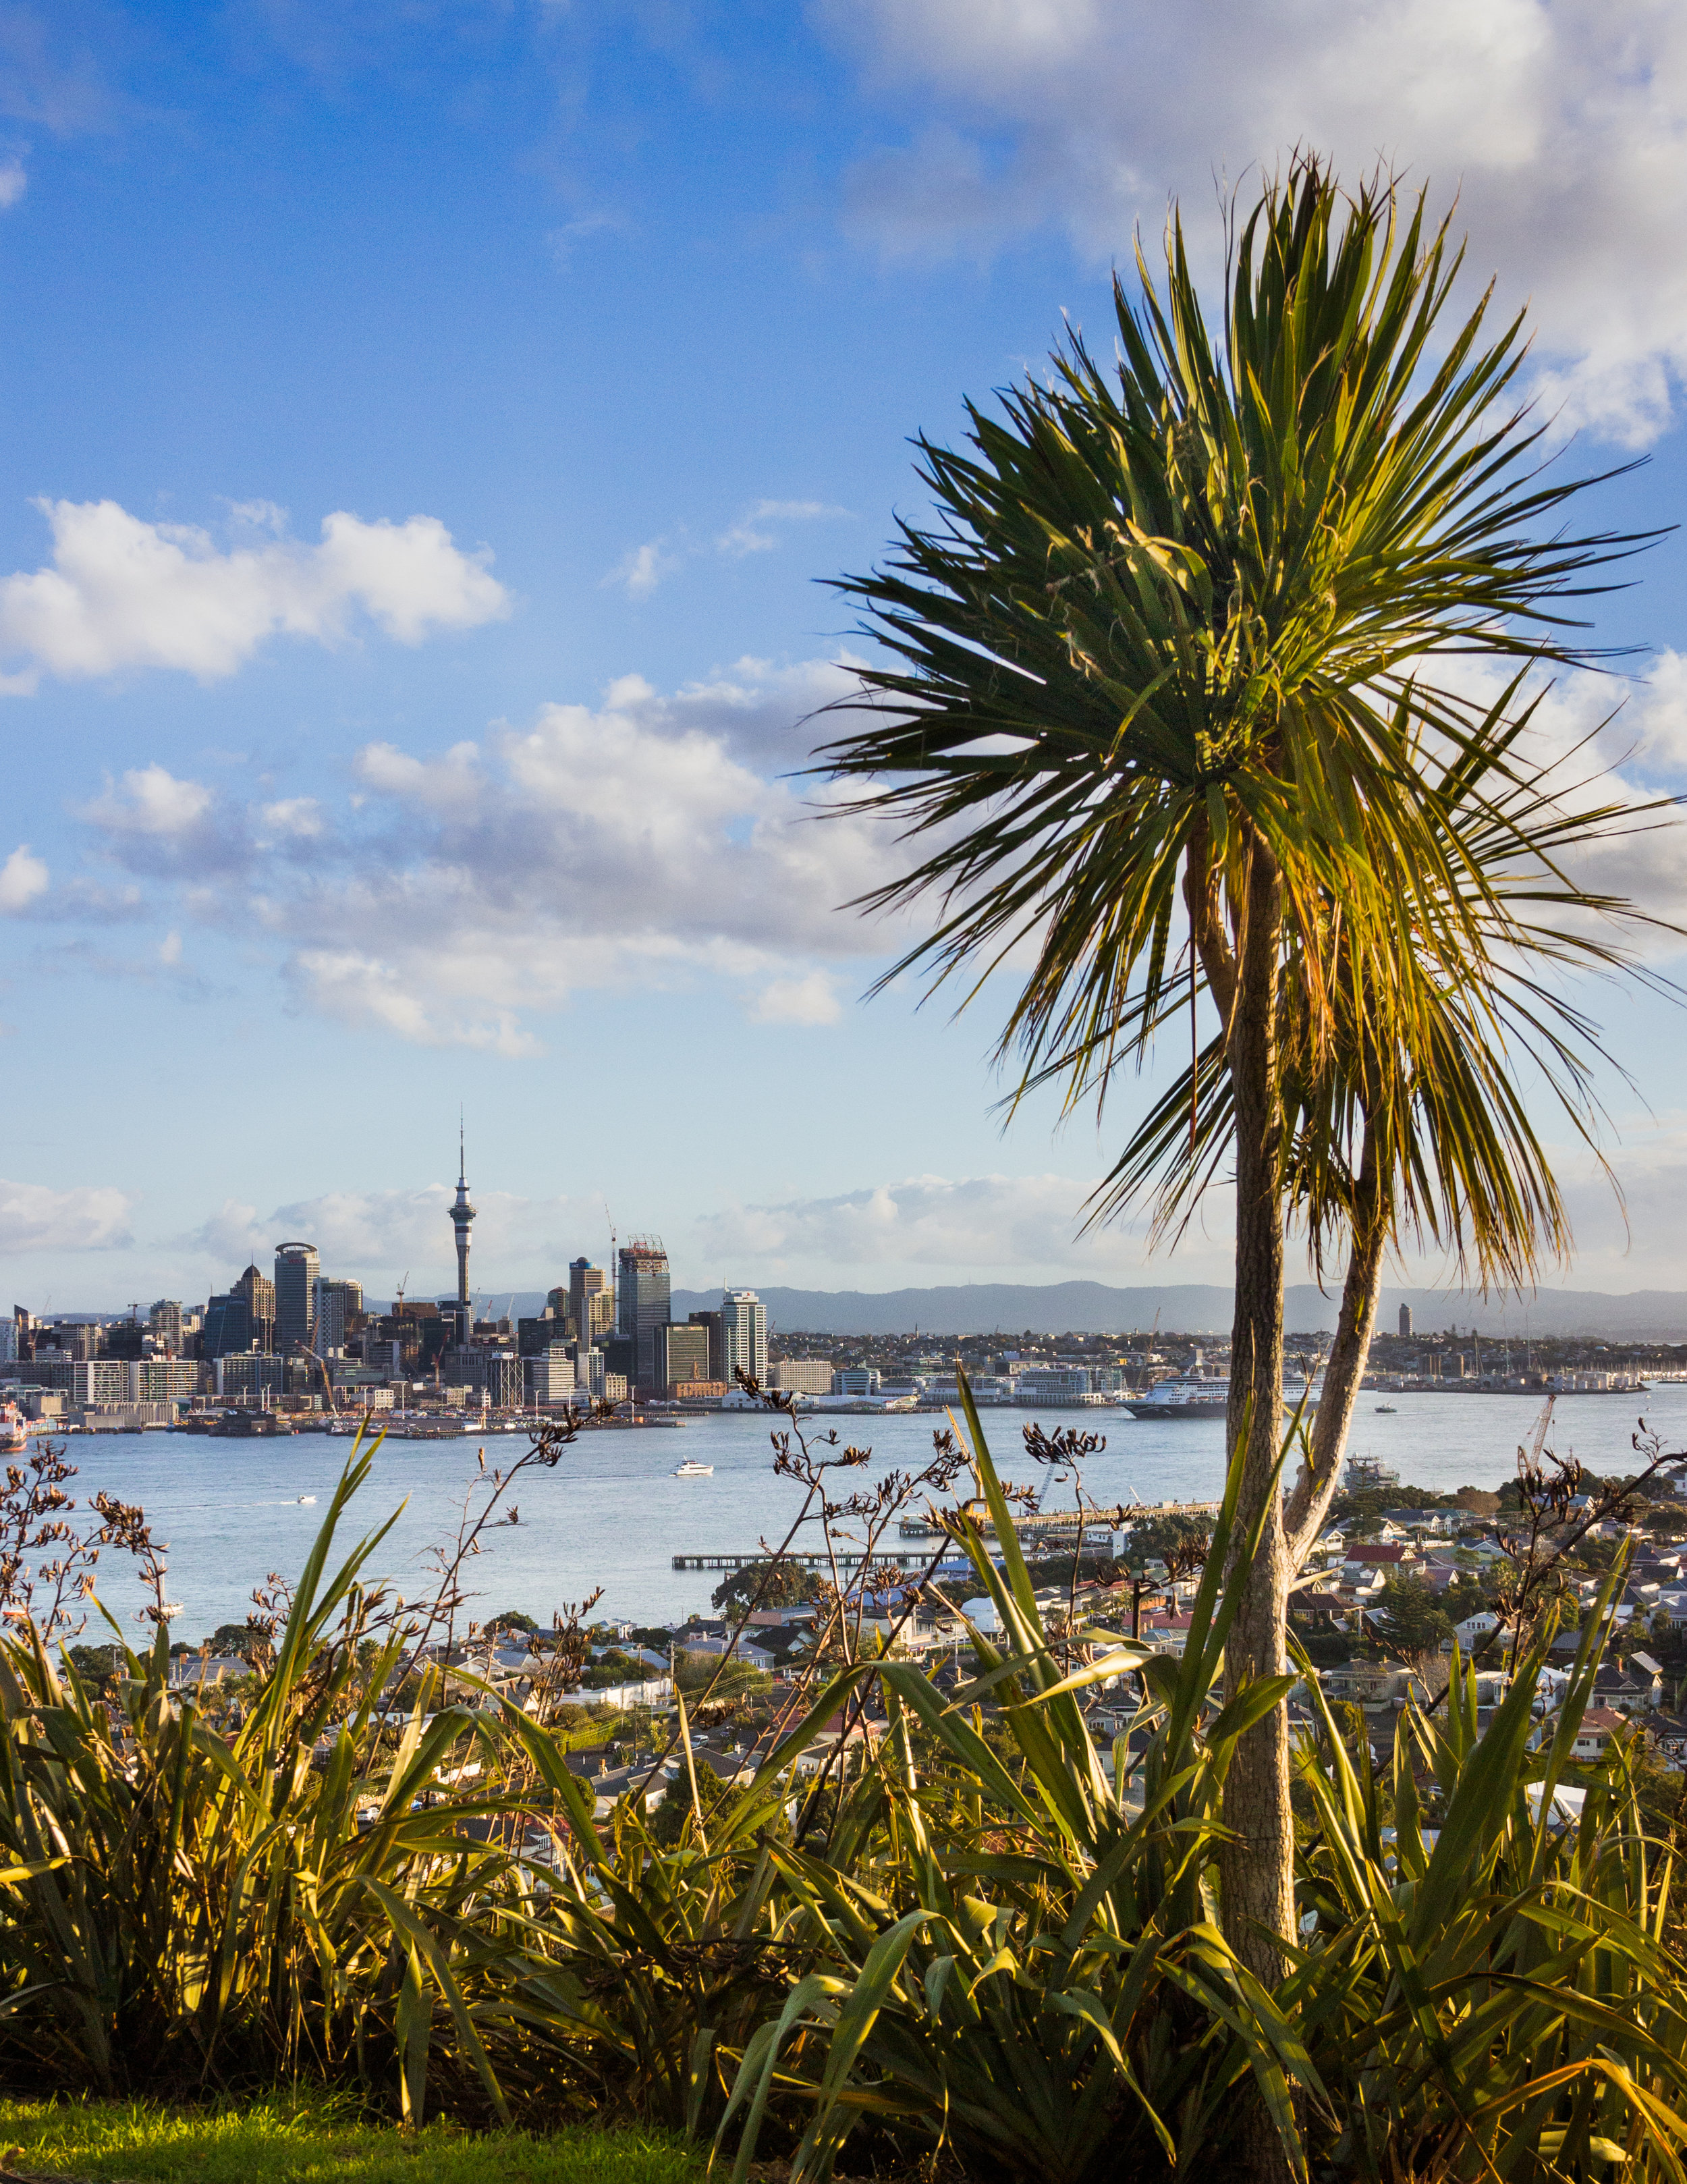 Mt Victoria's view of Auckland